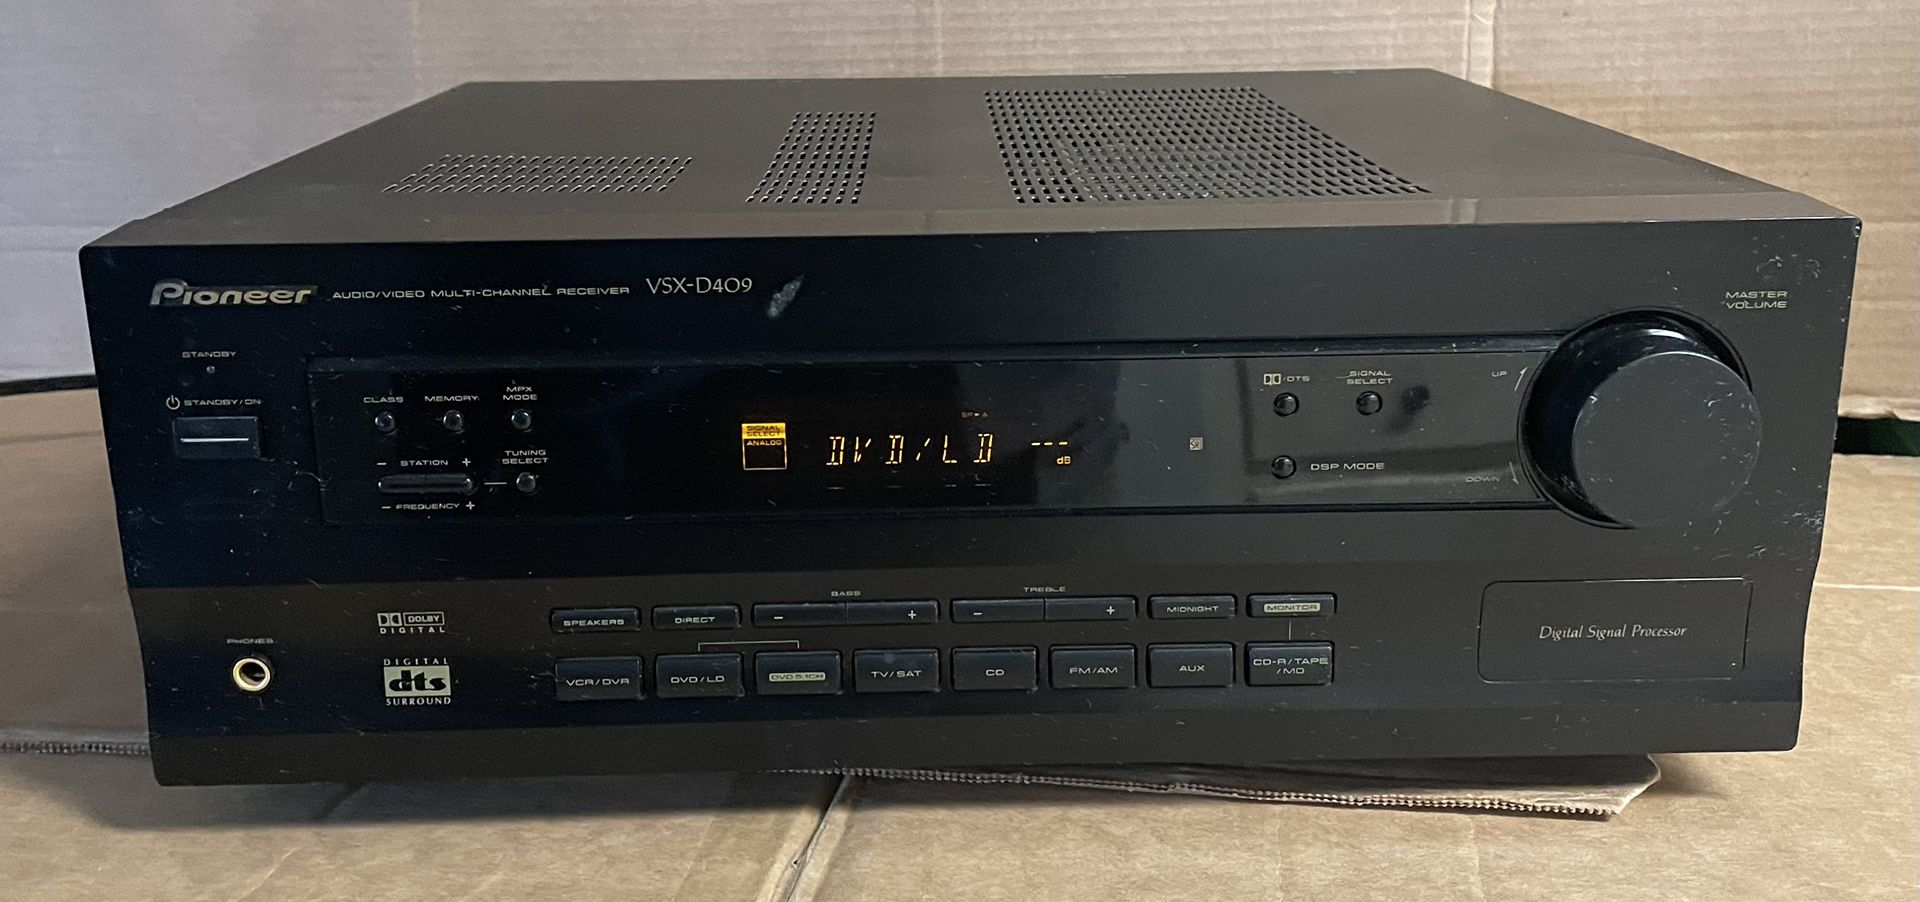 Pioneer VSX-D409 Dolby Digital Audio Video Multi-Channel A/V Receiver No Remote!